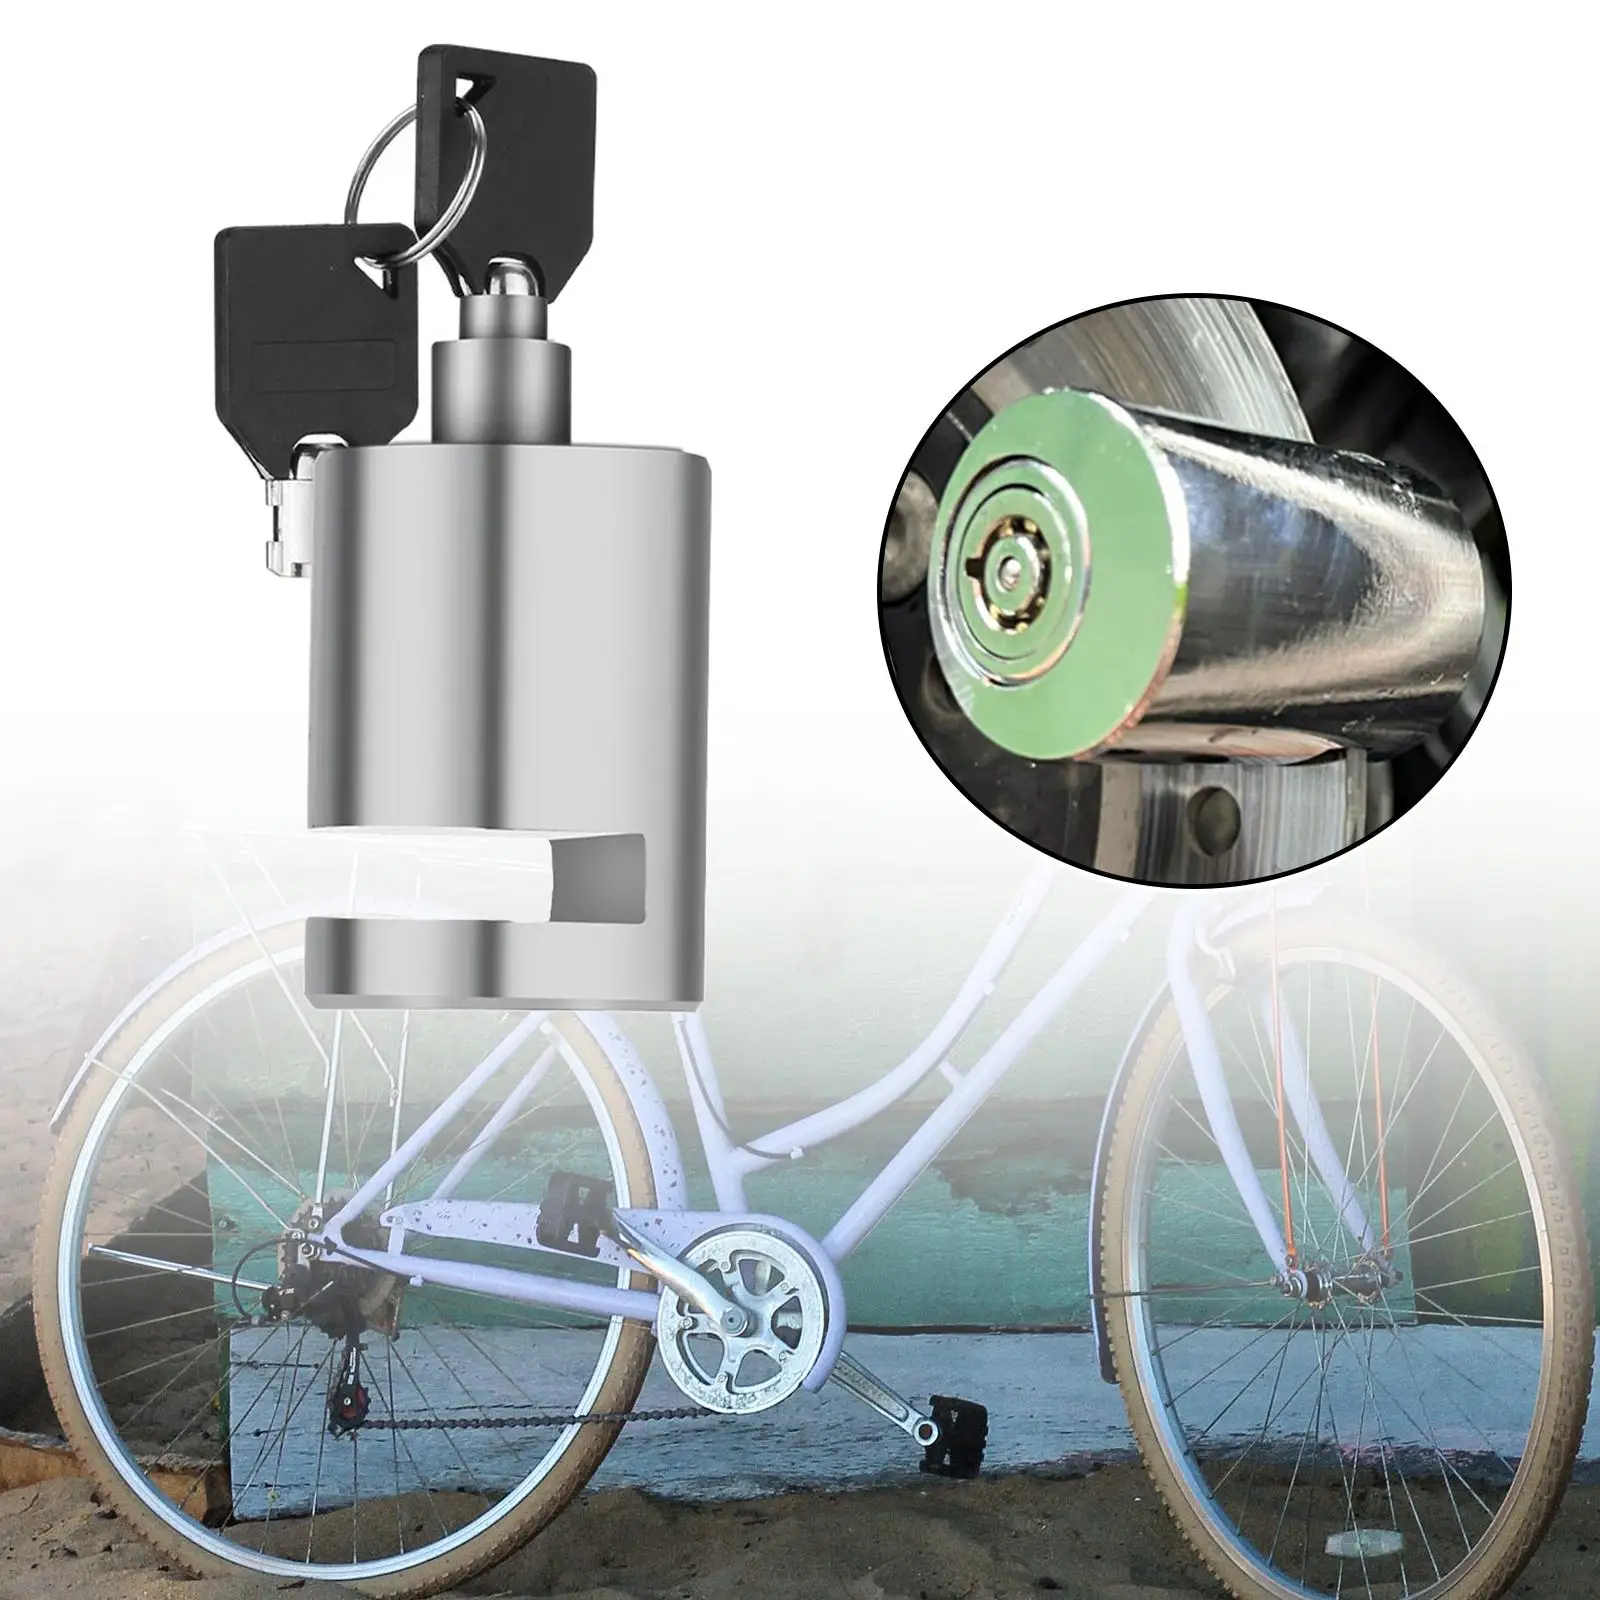 Bike Disc Brake Lock Safety Lock with Keys Electric Bike Security Lock Accessories Waterproof for Road Bike Cycling Motorcycle